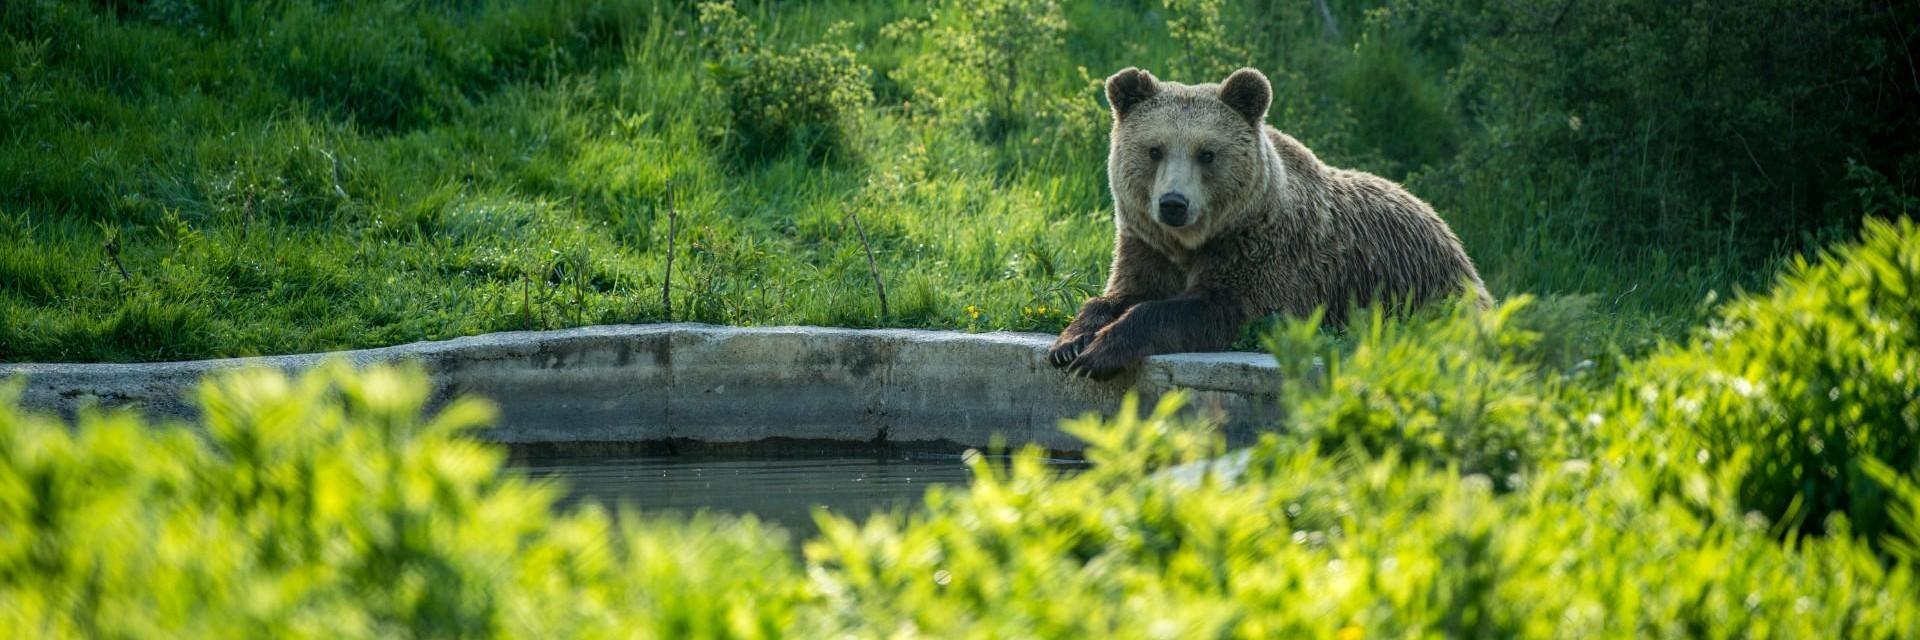 Brown bear Hana sitting by a pond